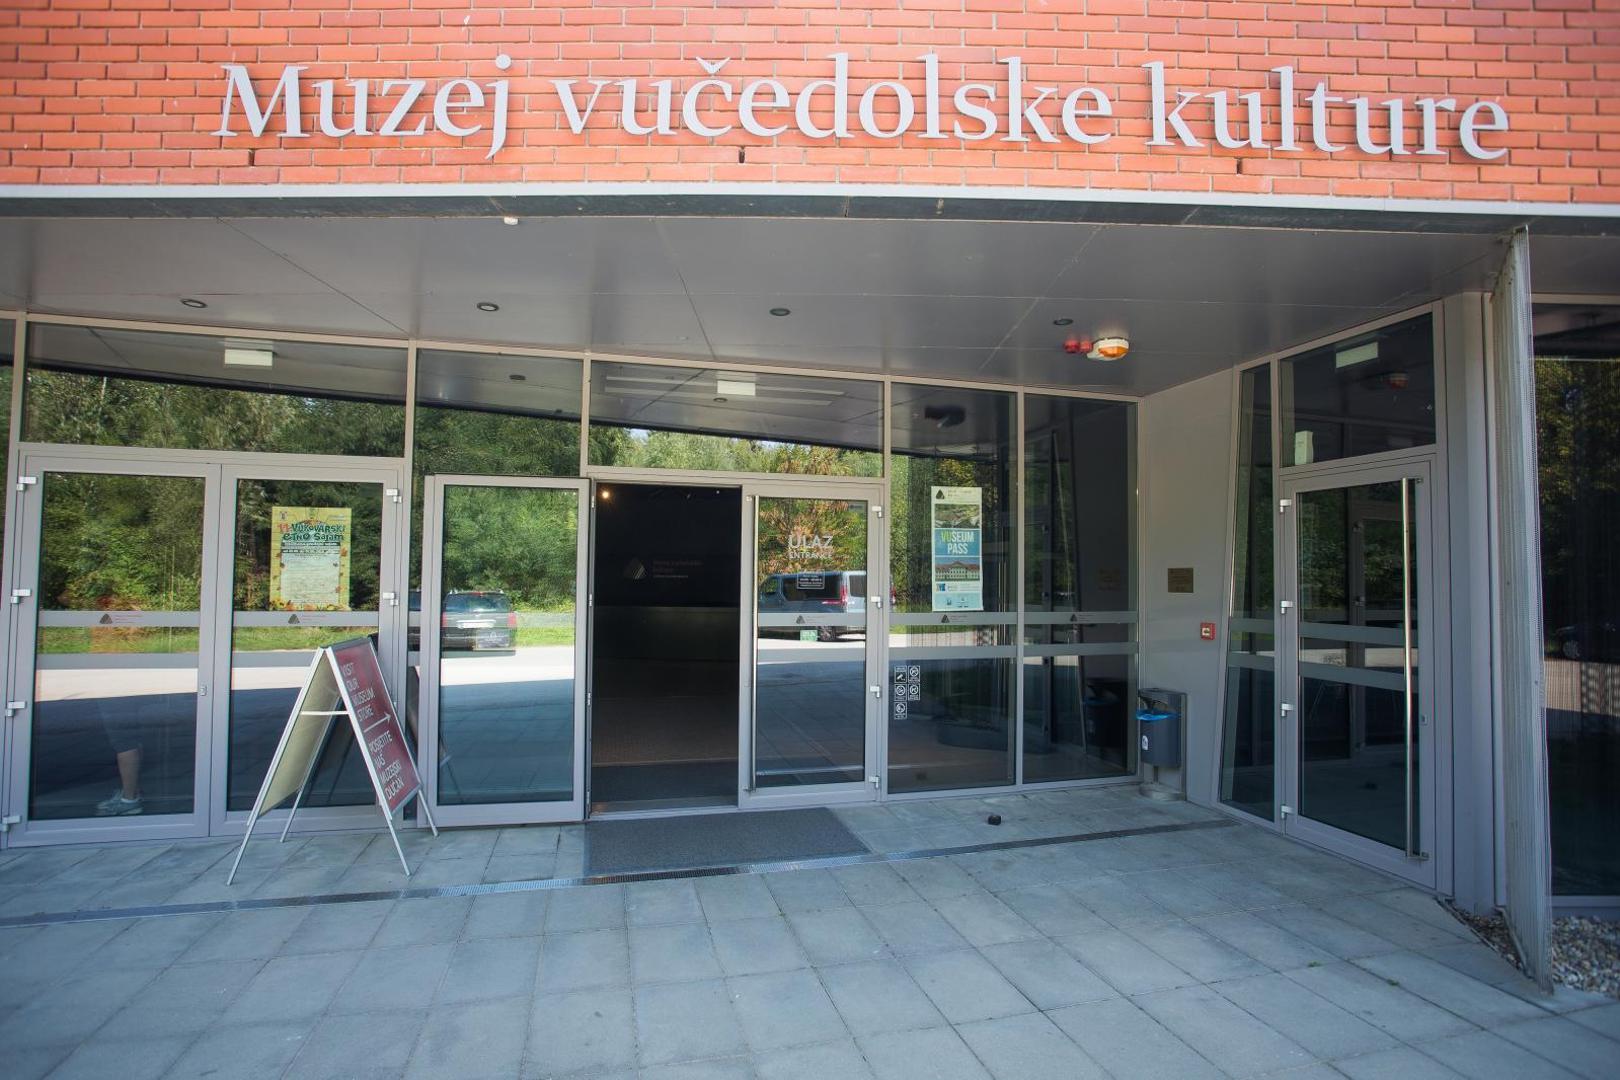 20.09.2018., Vukovar - Muzej vucedolske kulture i arheolosko nalaziste na Vucedolu bogato nalazima starim 5000 godina. 

Photo: Davor Javorovic/PIXSELL